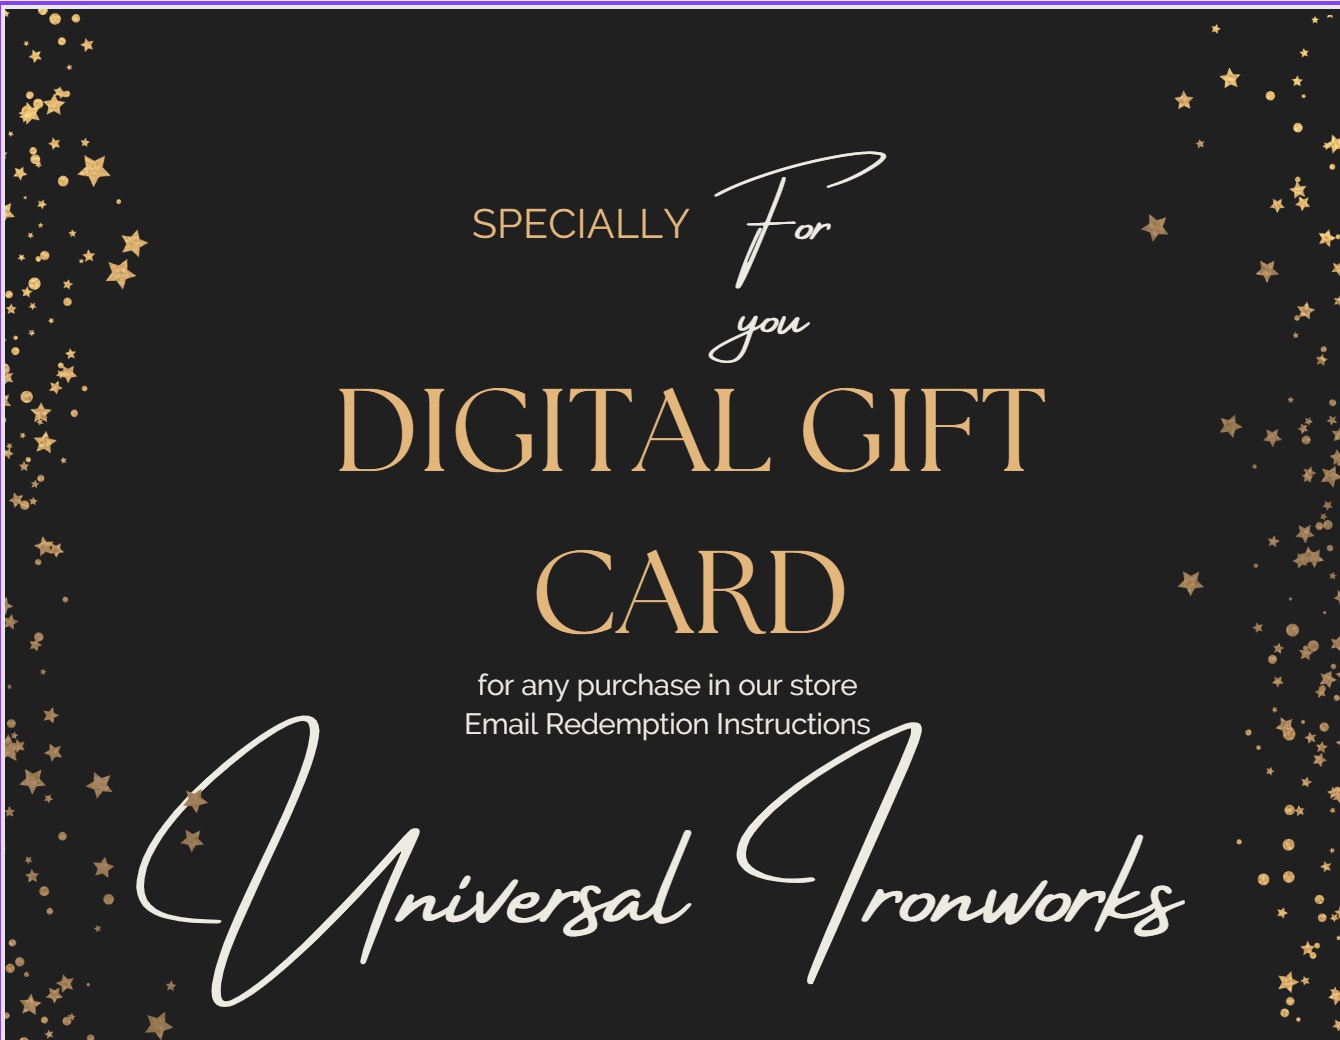 Universal Ironworks Digital Gift Card